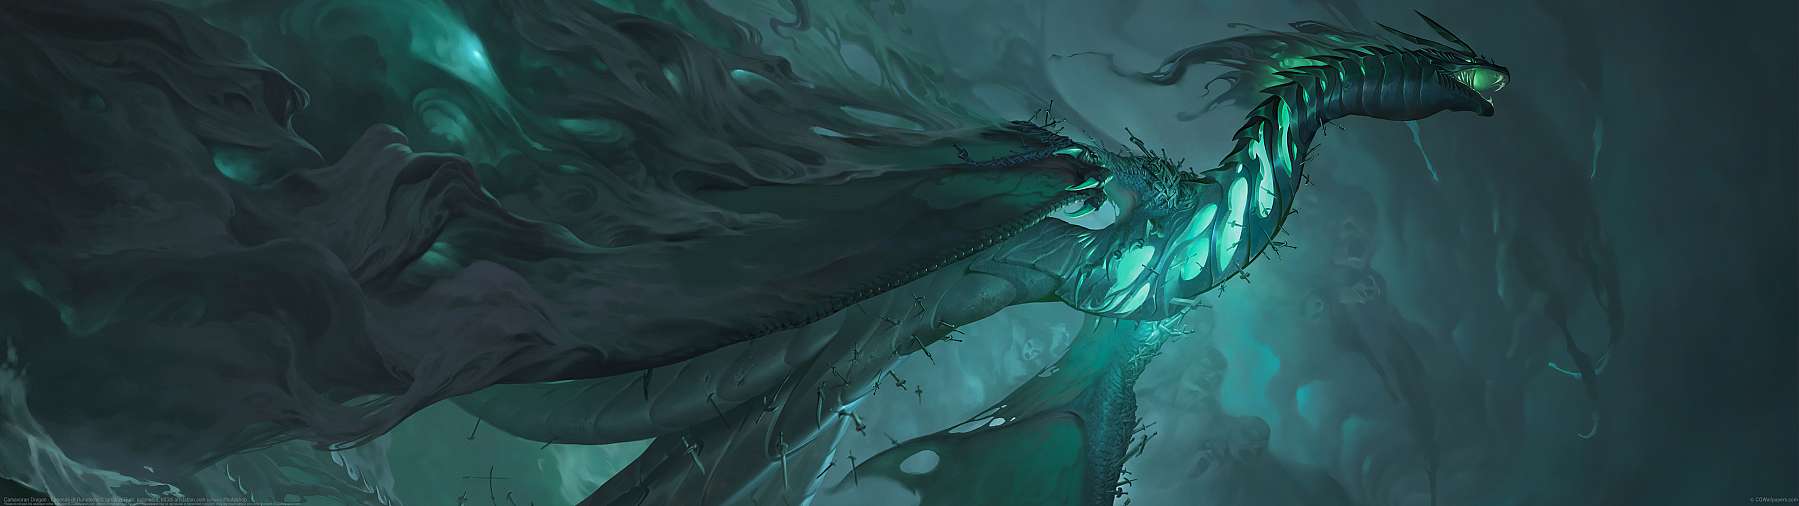 Camavoran Dragon - Legends of Runeterra ultrawide wallpaper